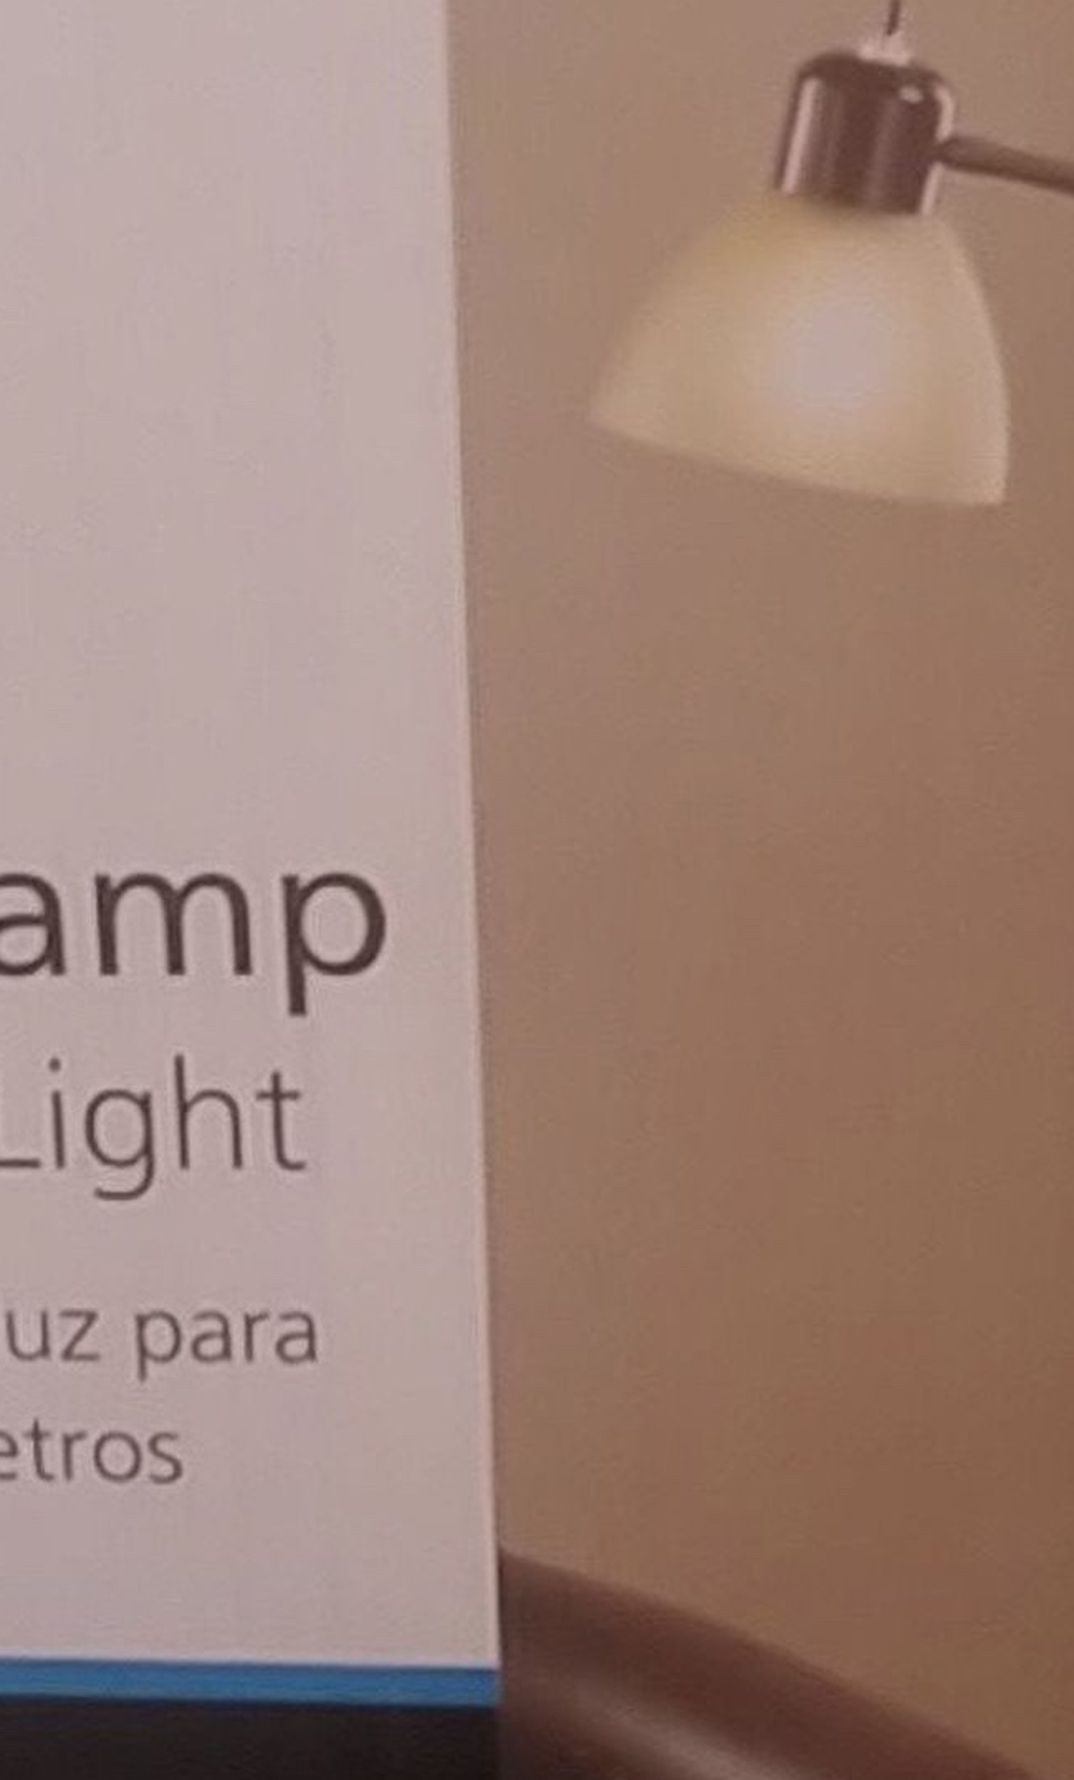 Brand New Floor Lamp